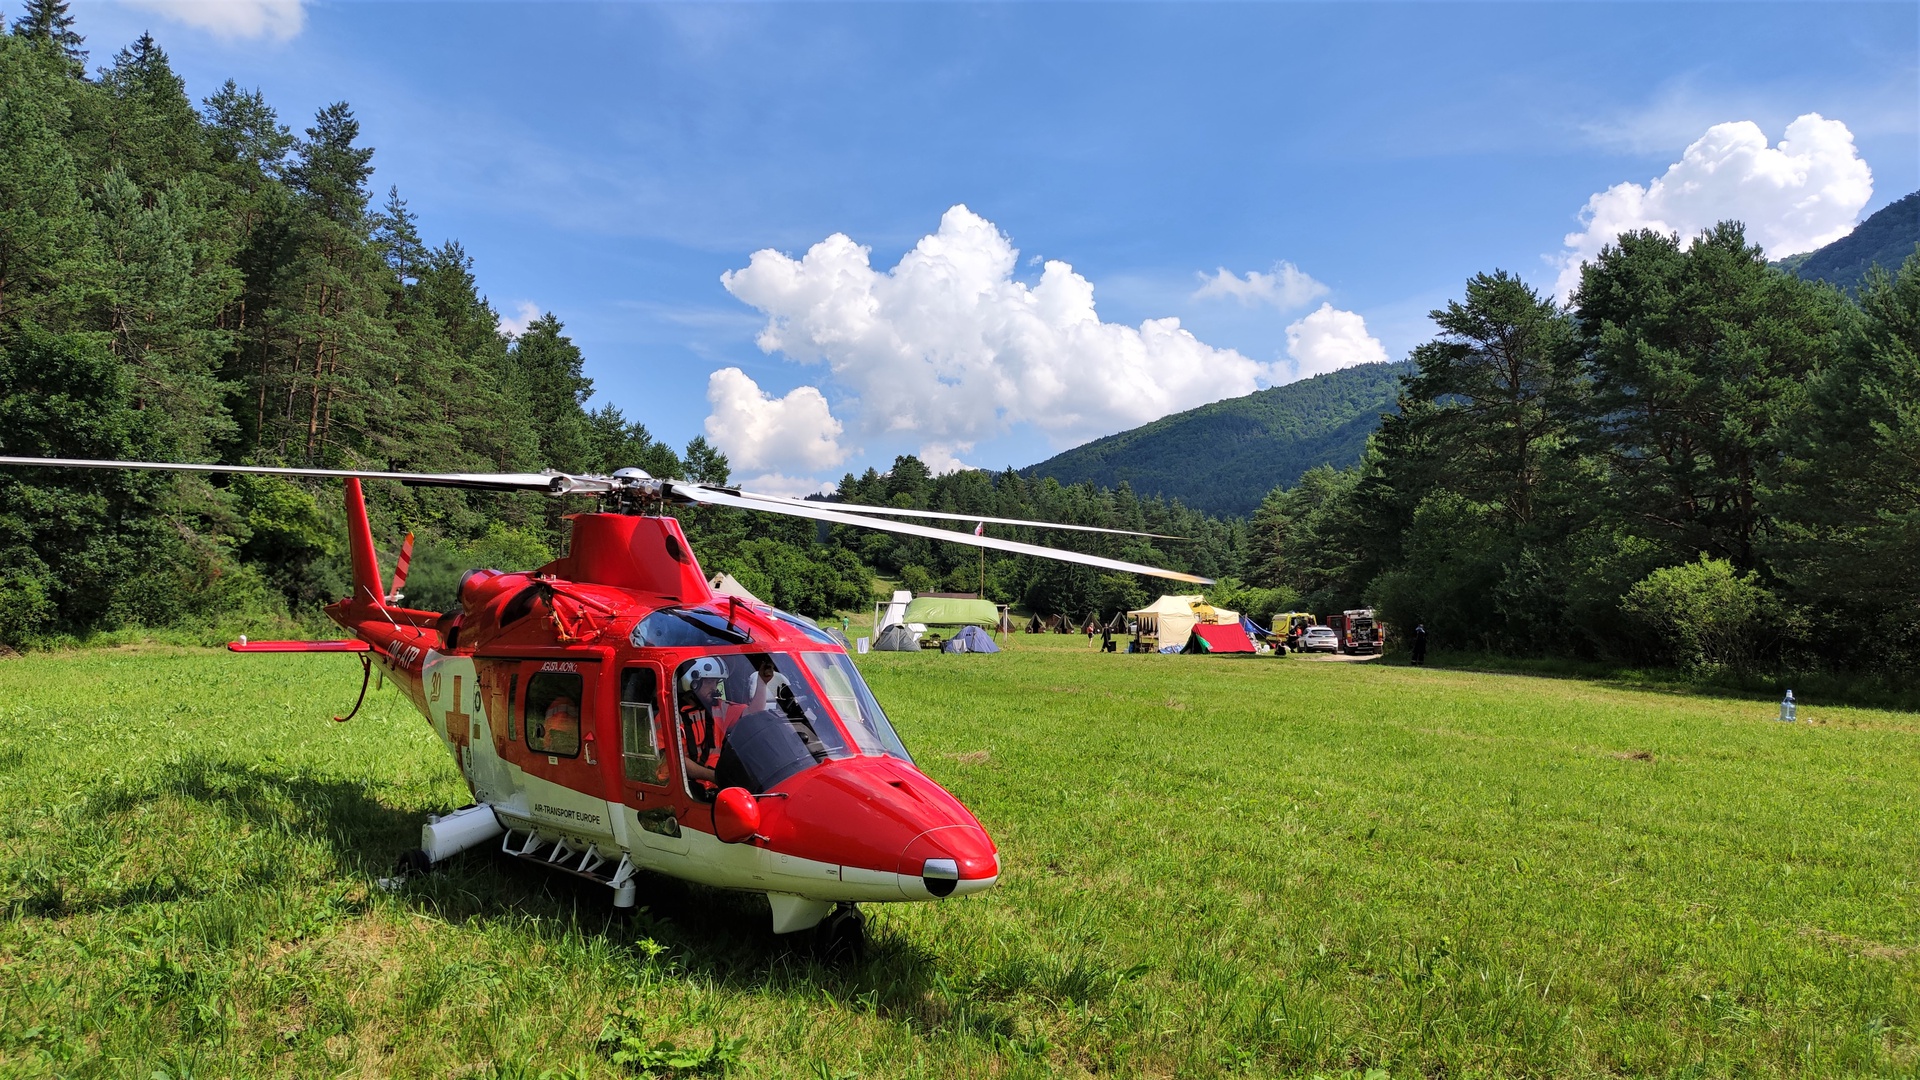 Dva záchranárske vrtuľníky pomáhali pri popáleninách dvoch osôb